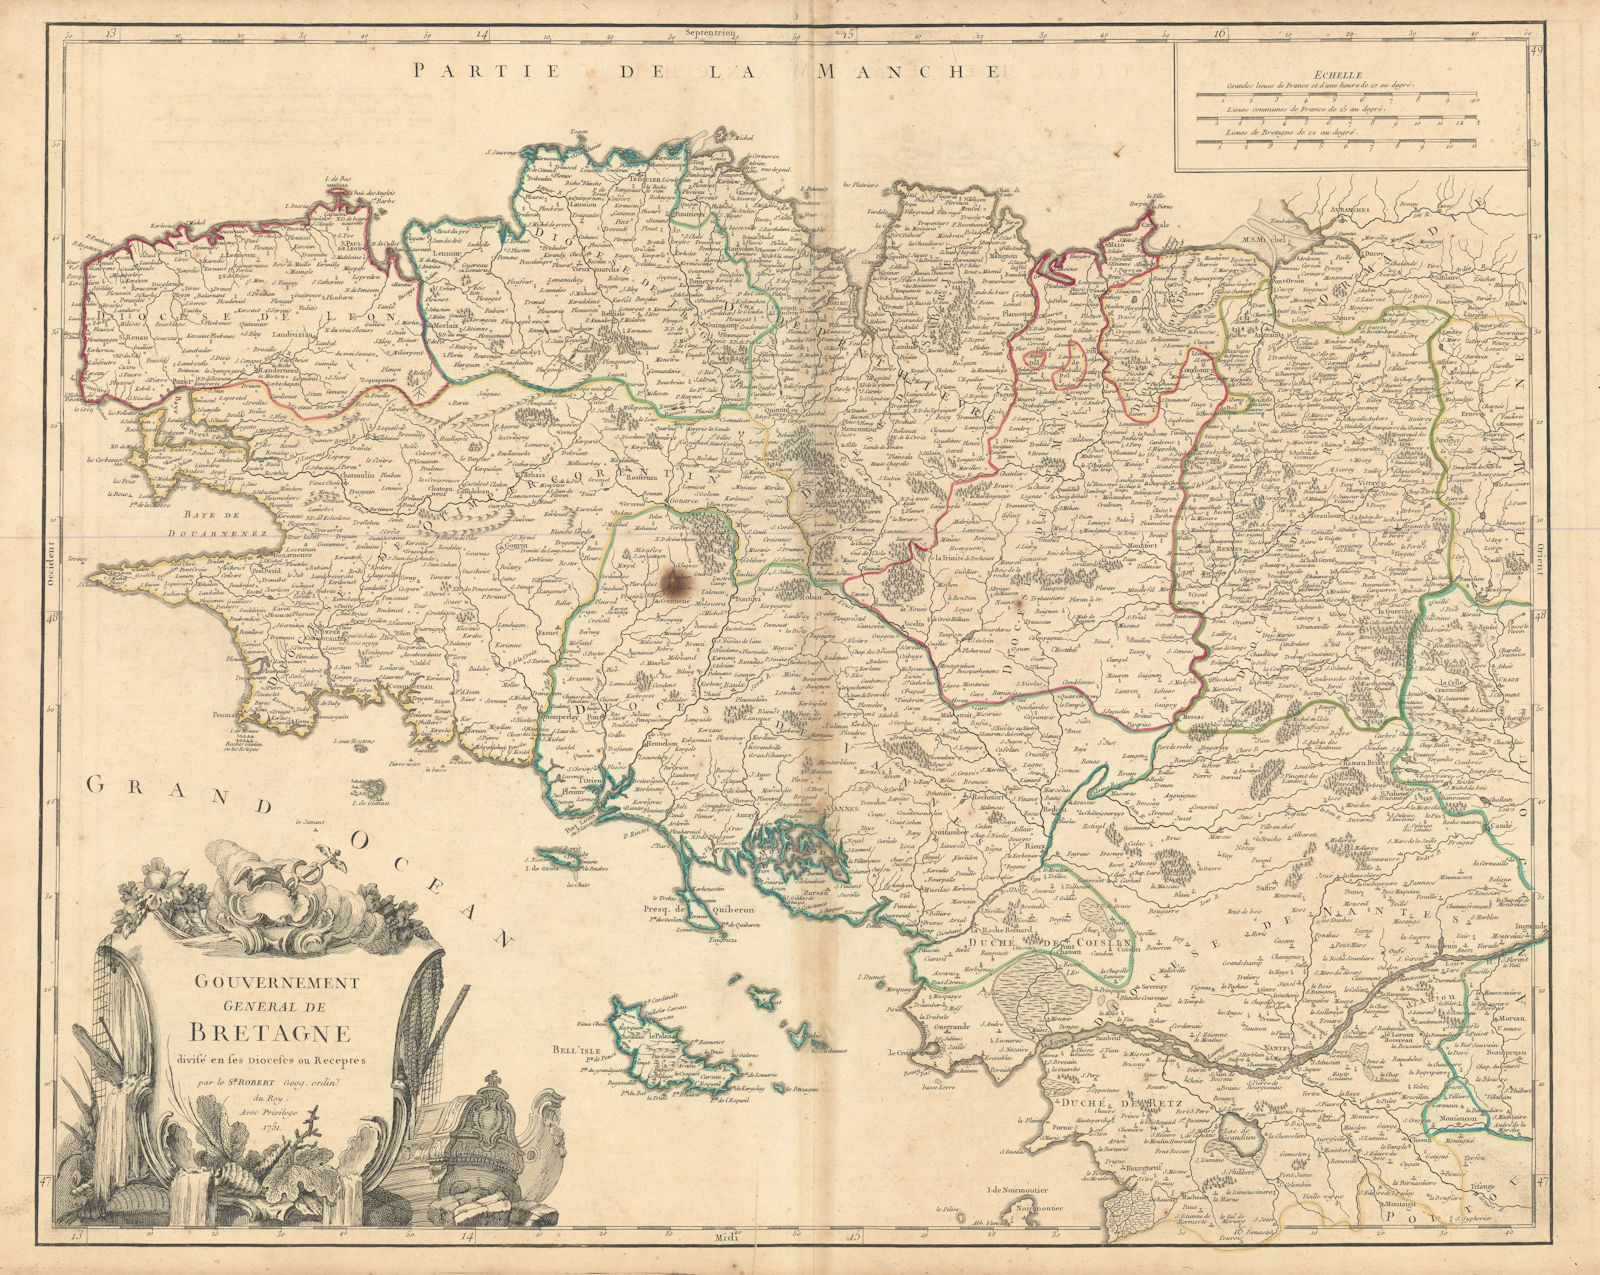 "Gouvernement General de Bretagne" Brittany, NW France. VAUGONDY 1751 old map